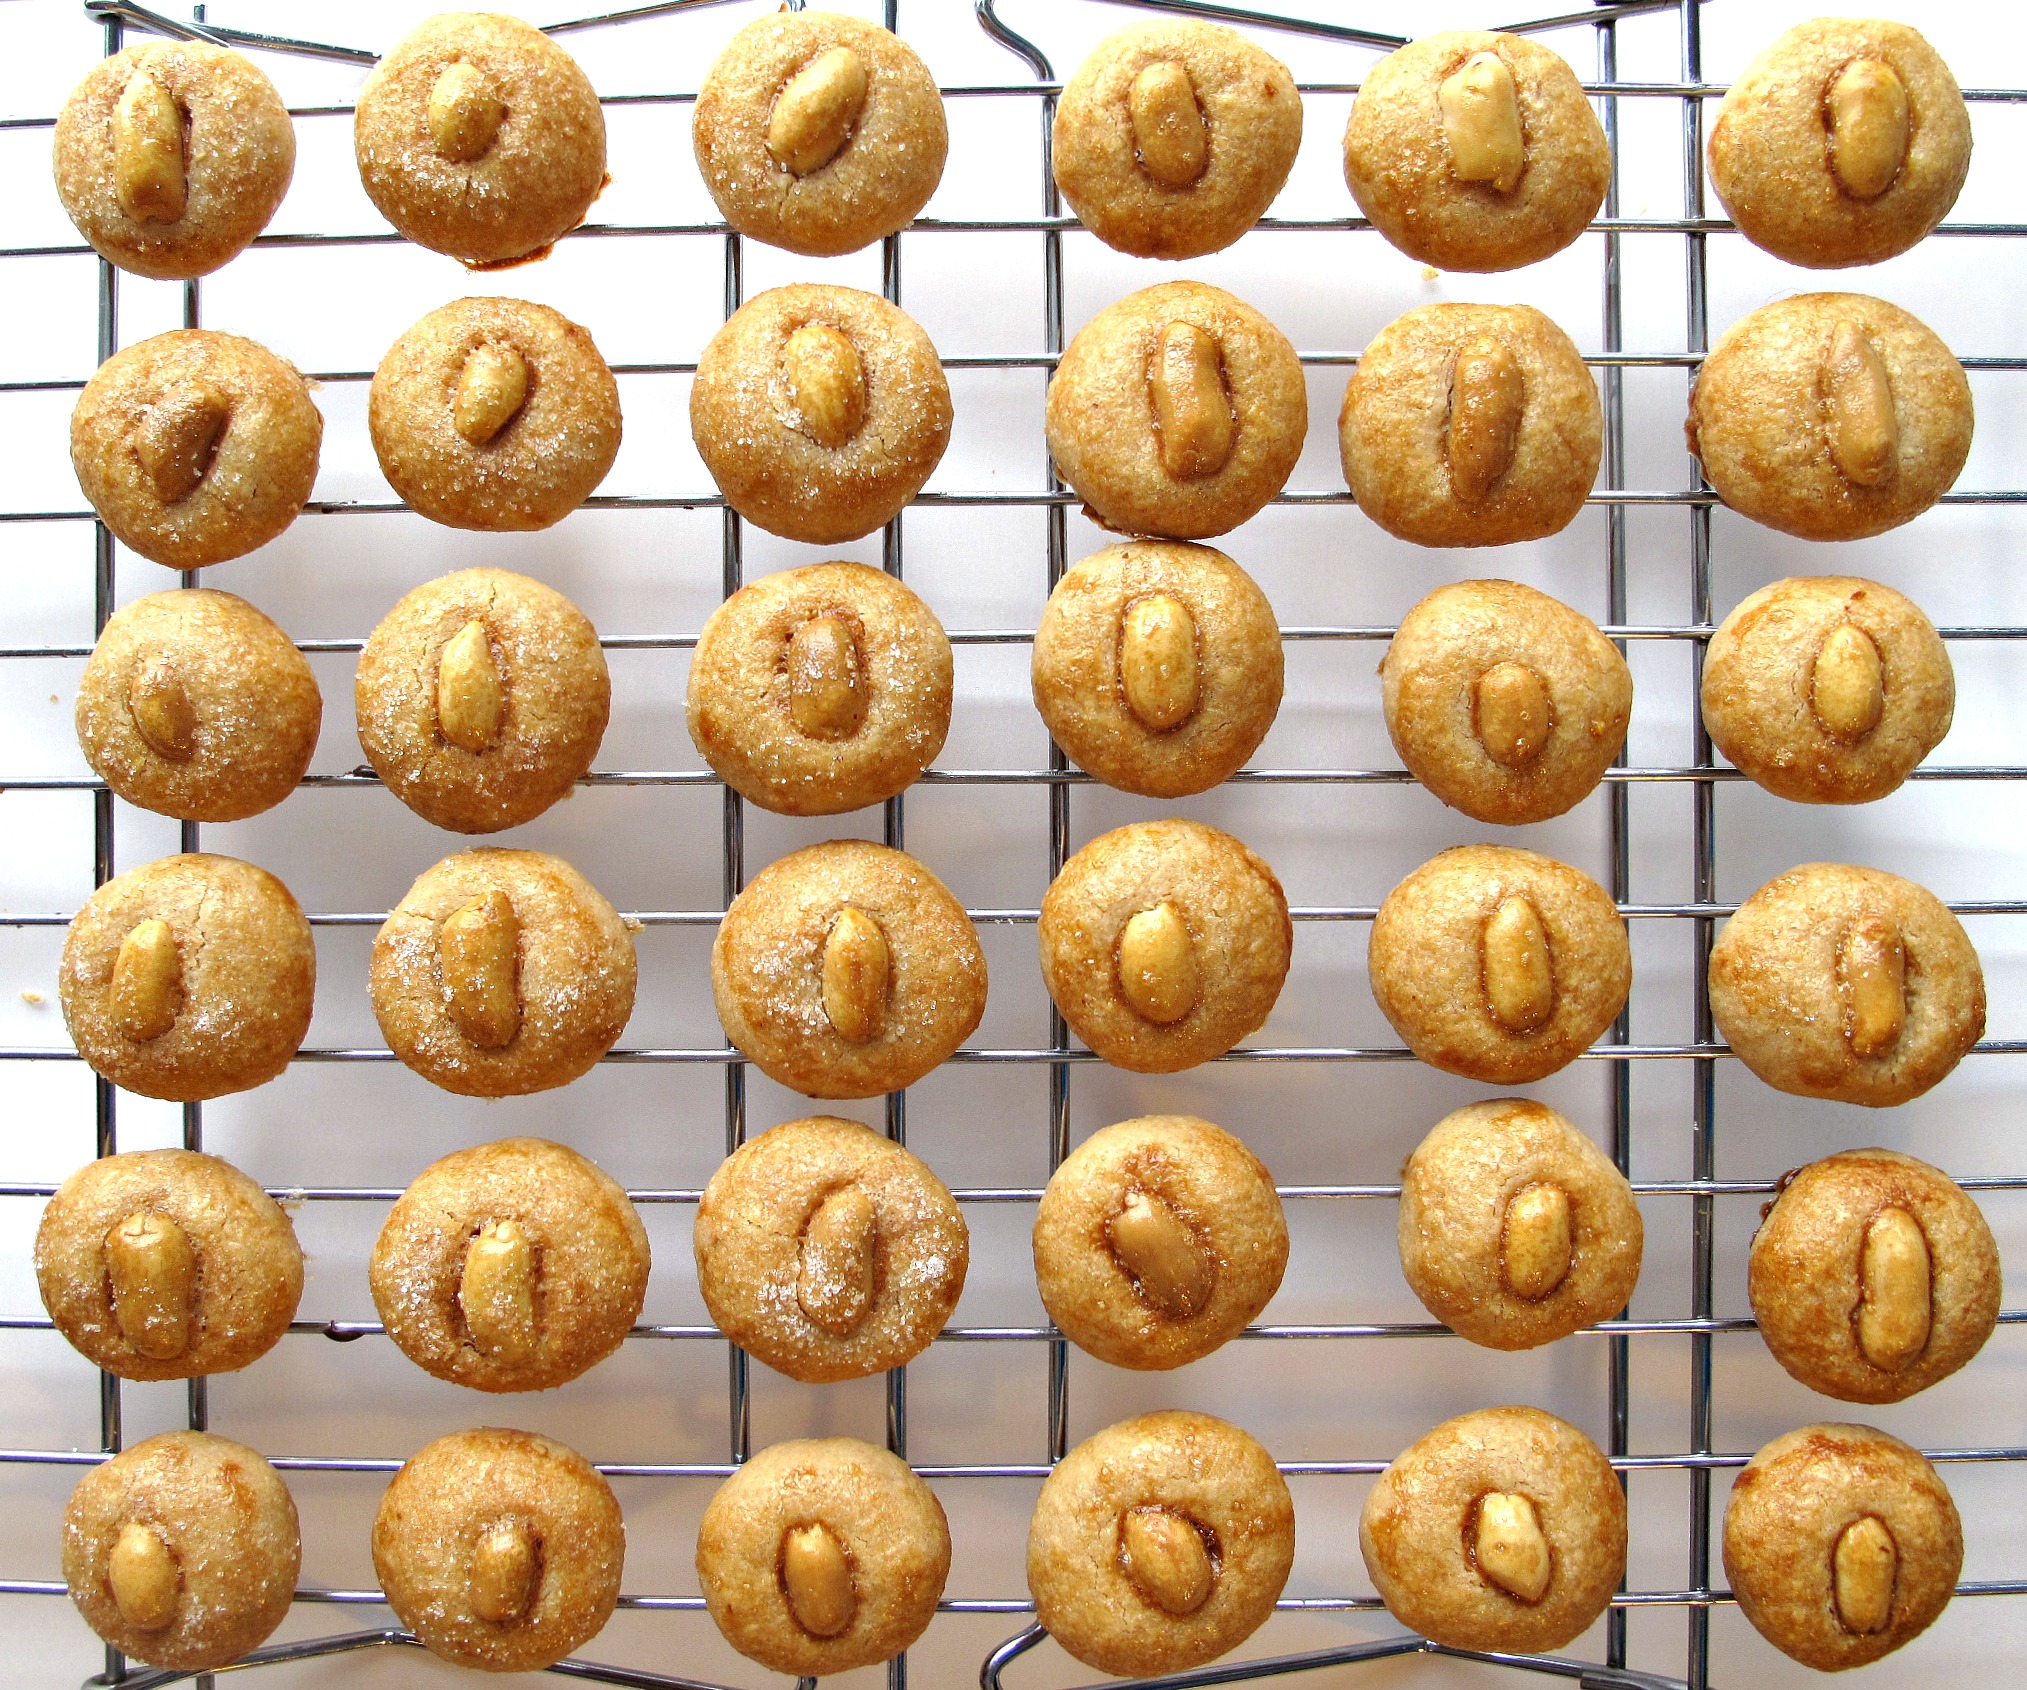 Chinese New Year Peanut Cookies (花生饼) |The Monday Box